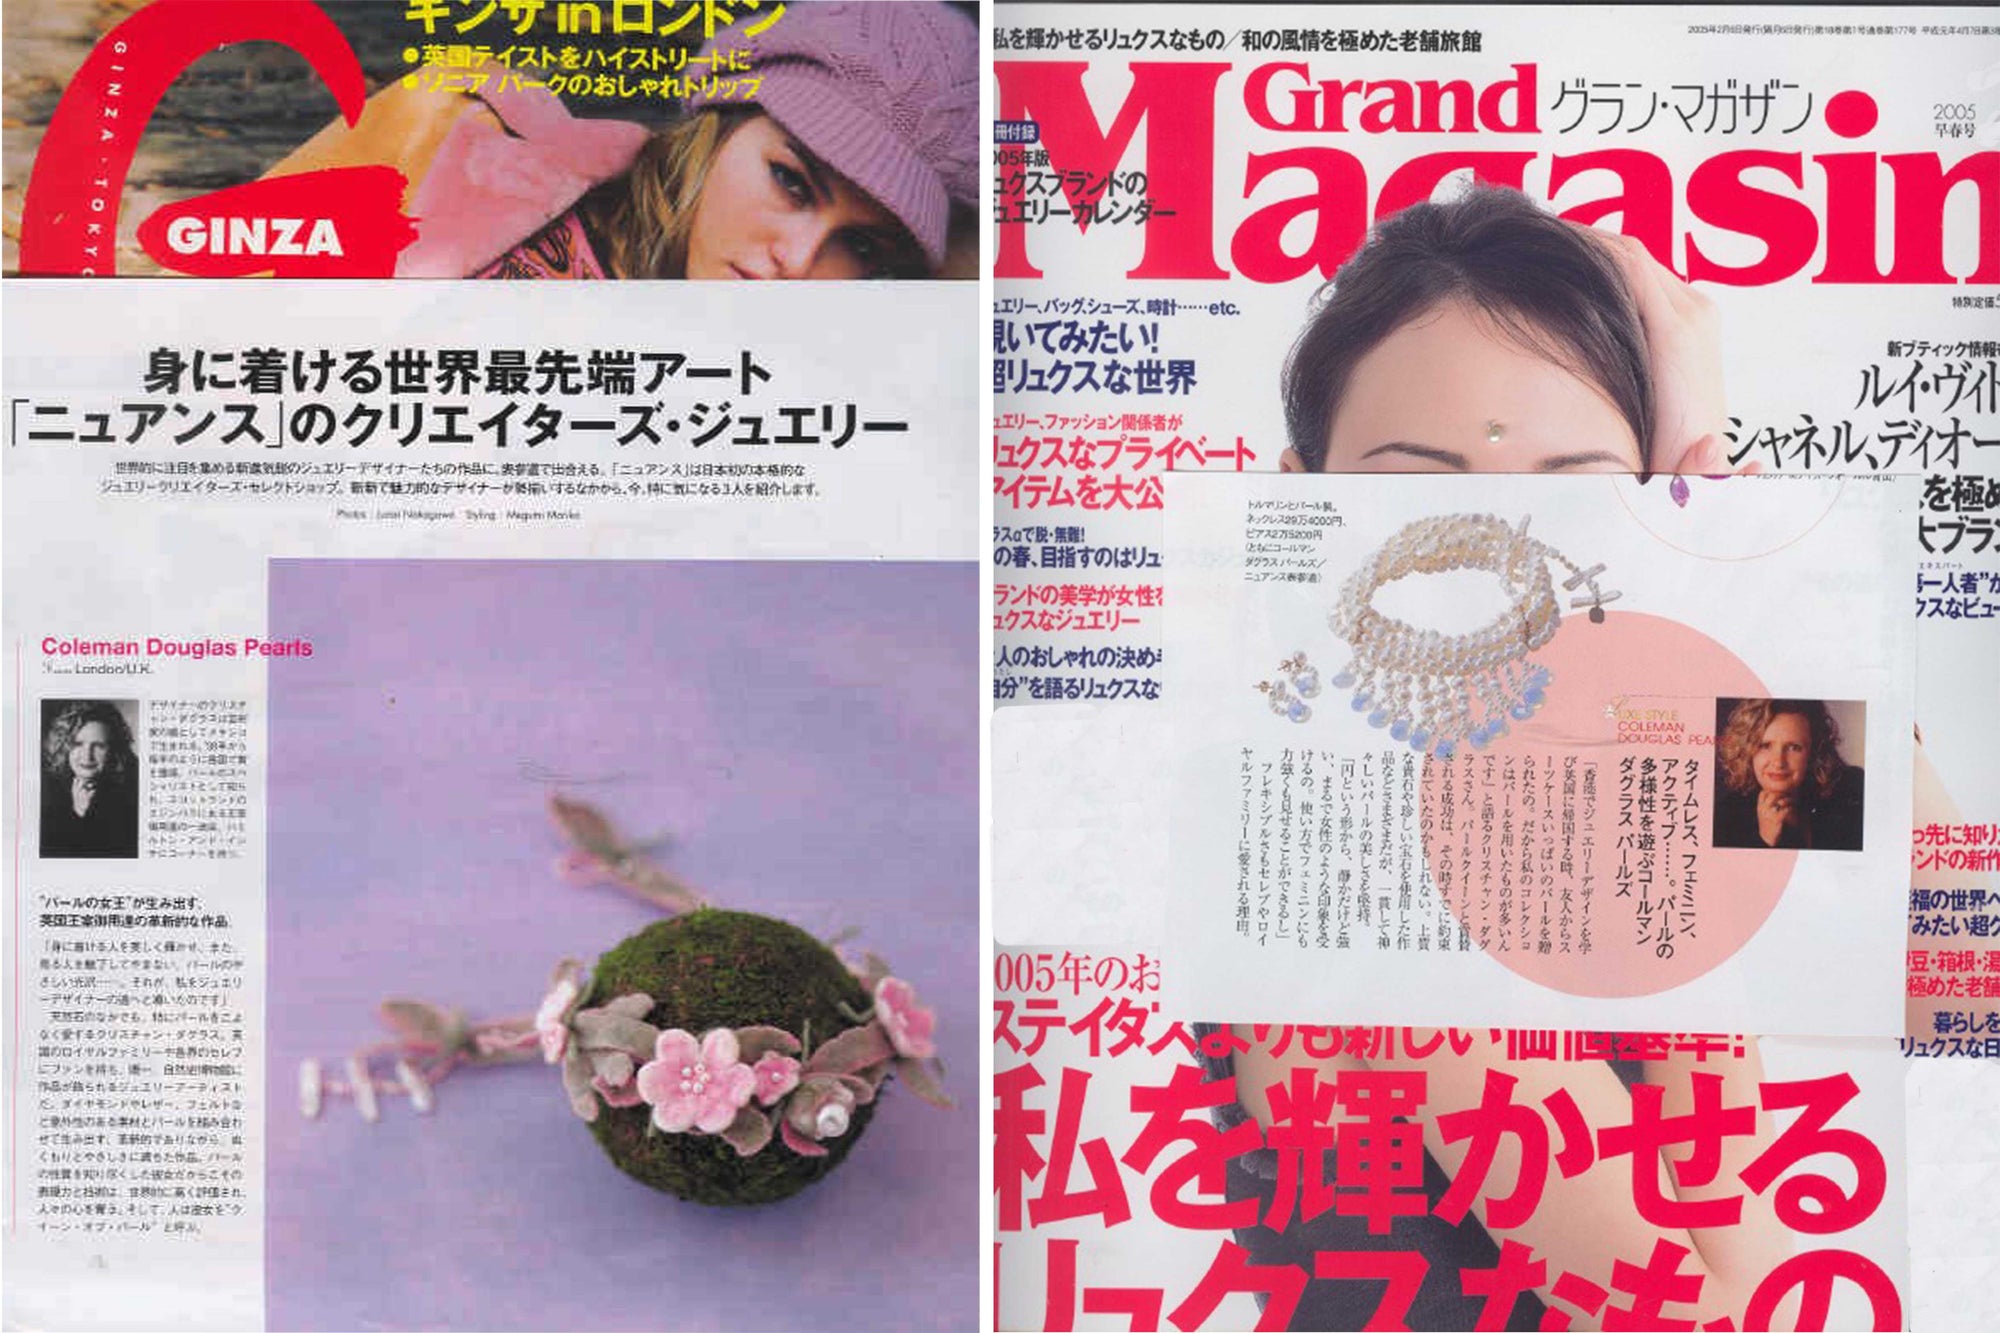 Ginza and Grand Magazin Japan